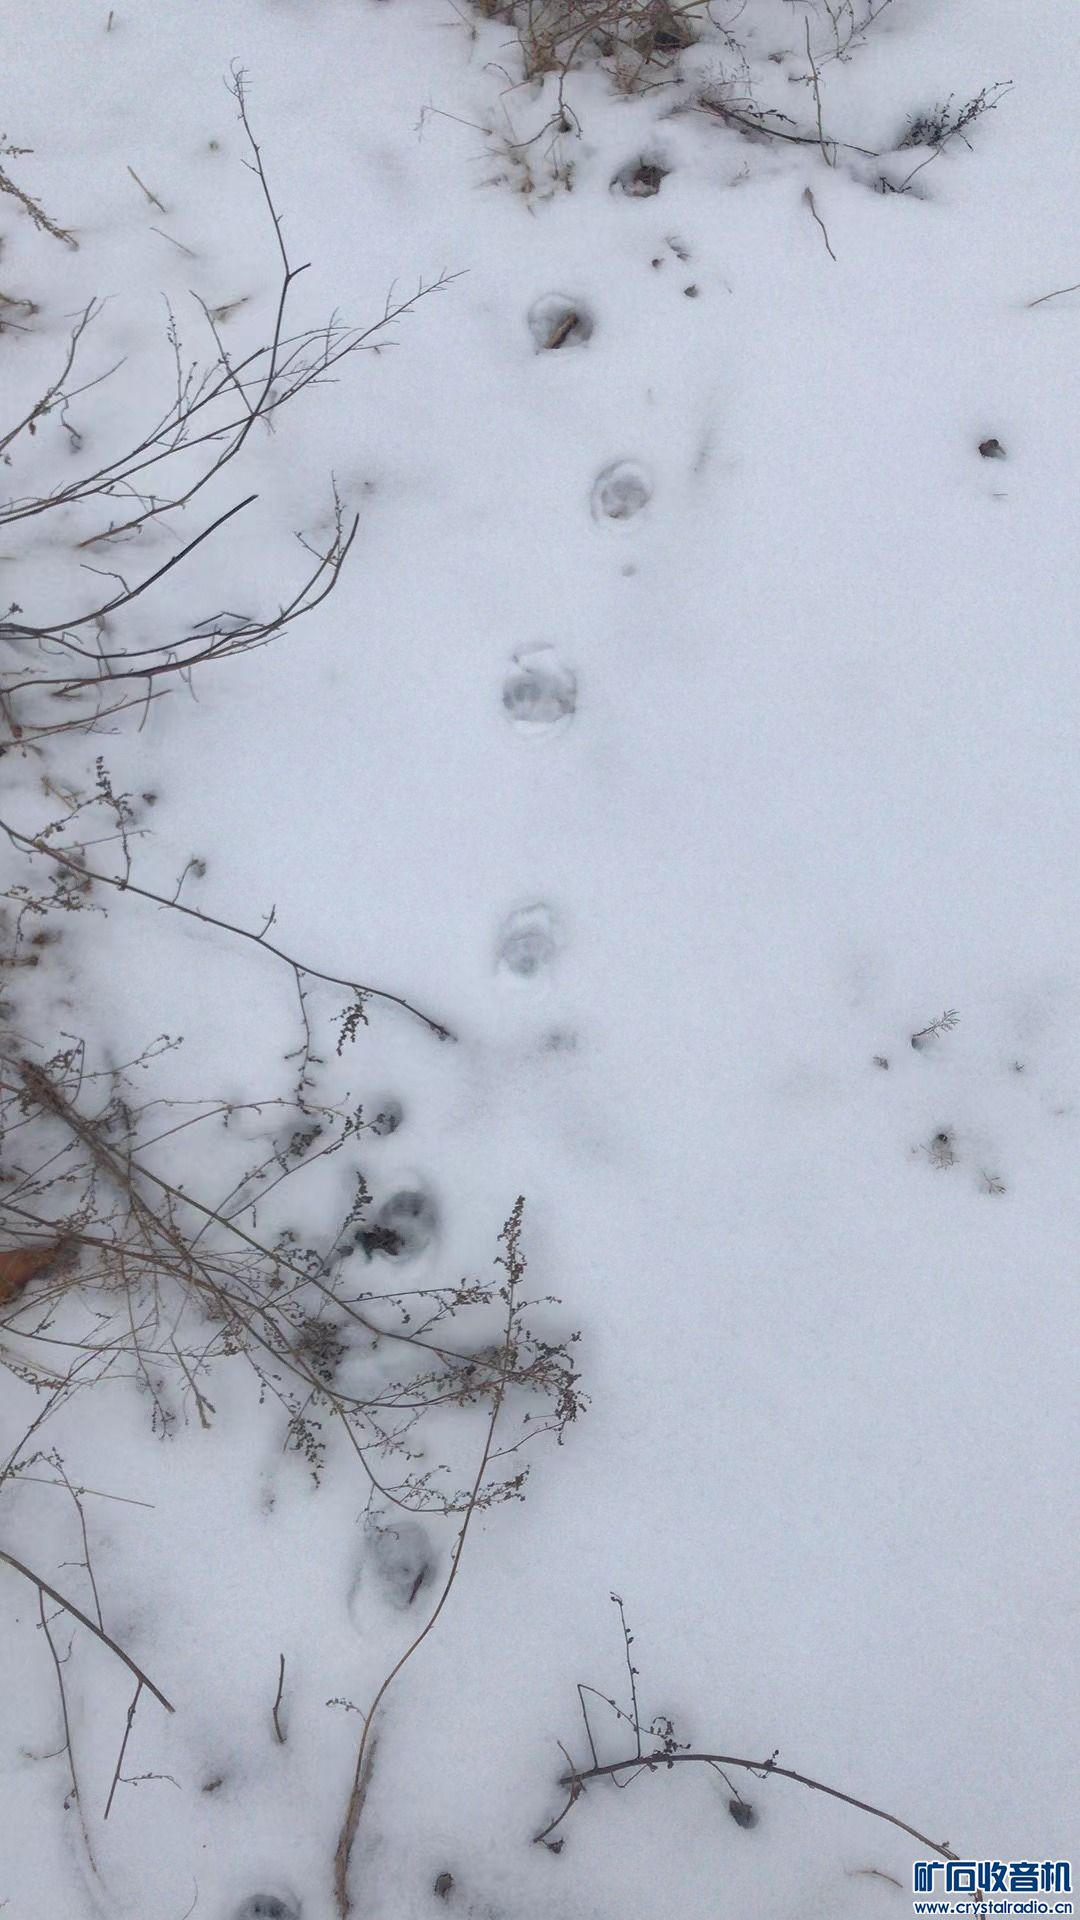 three cat footprints in the snow | Animal Stock Photos ~ Creative Market